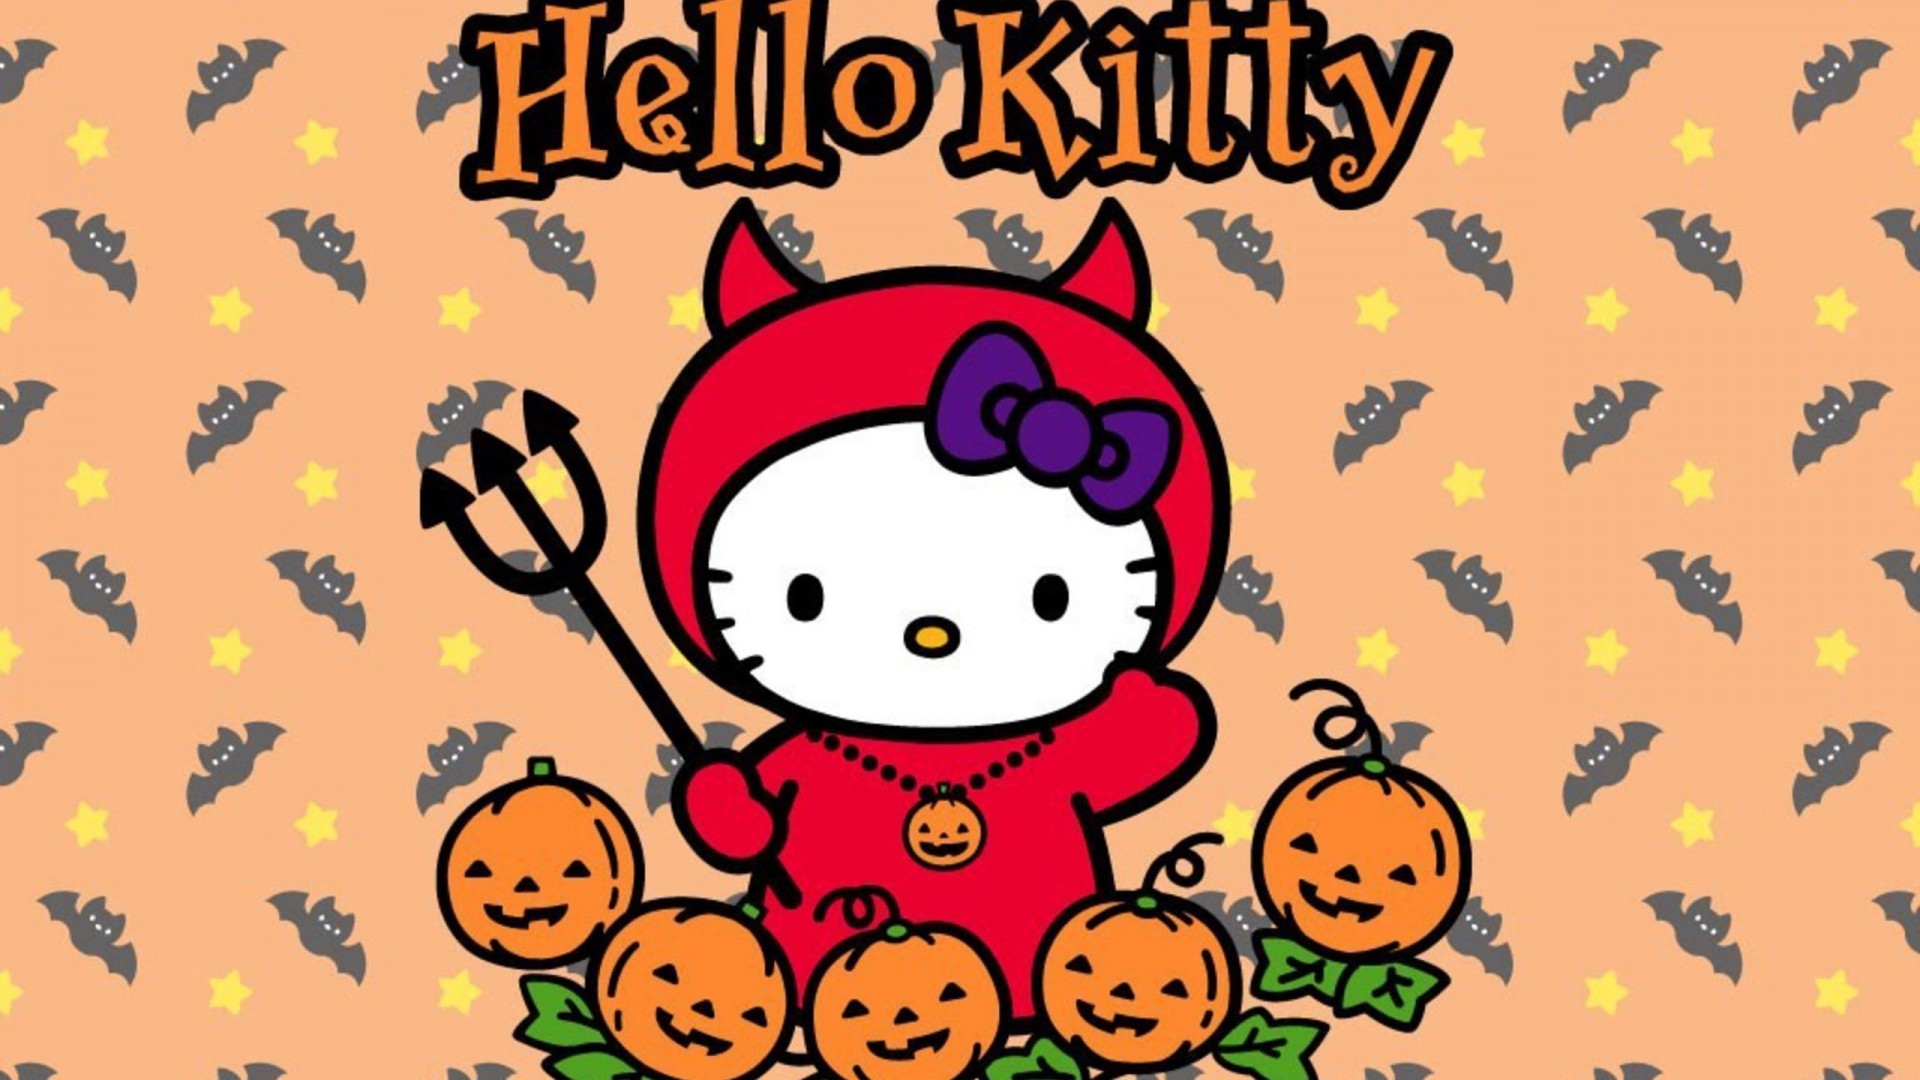 1920x1080 Hello Kitty Halloween Wallpaper Download Free.